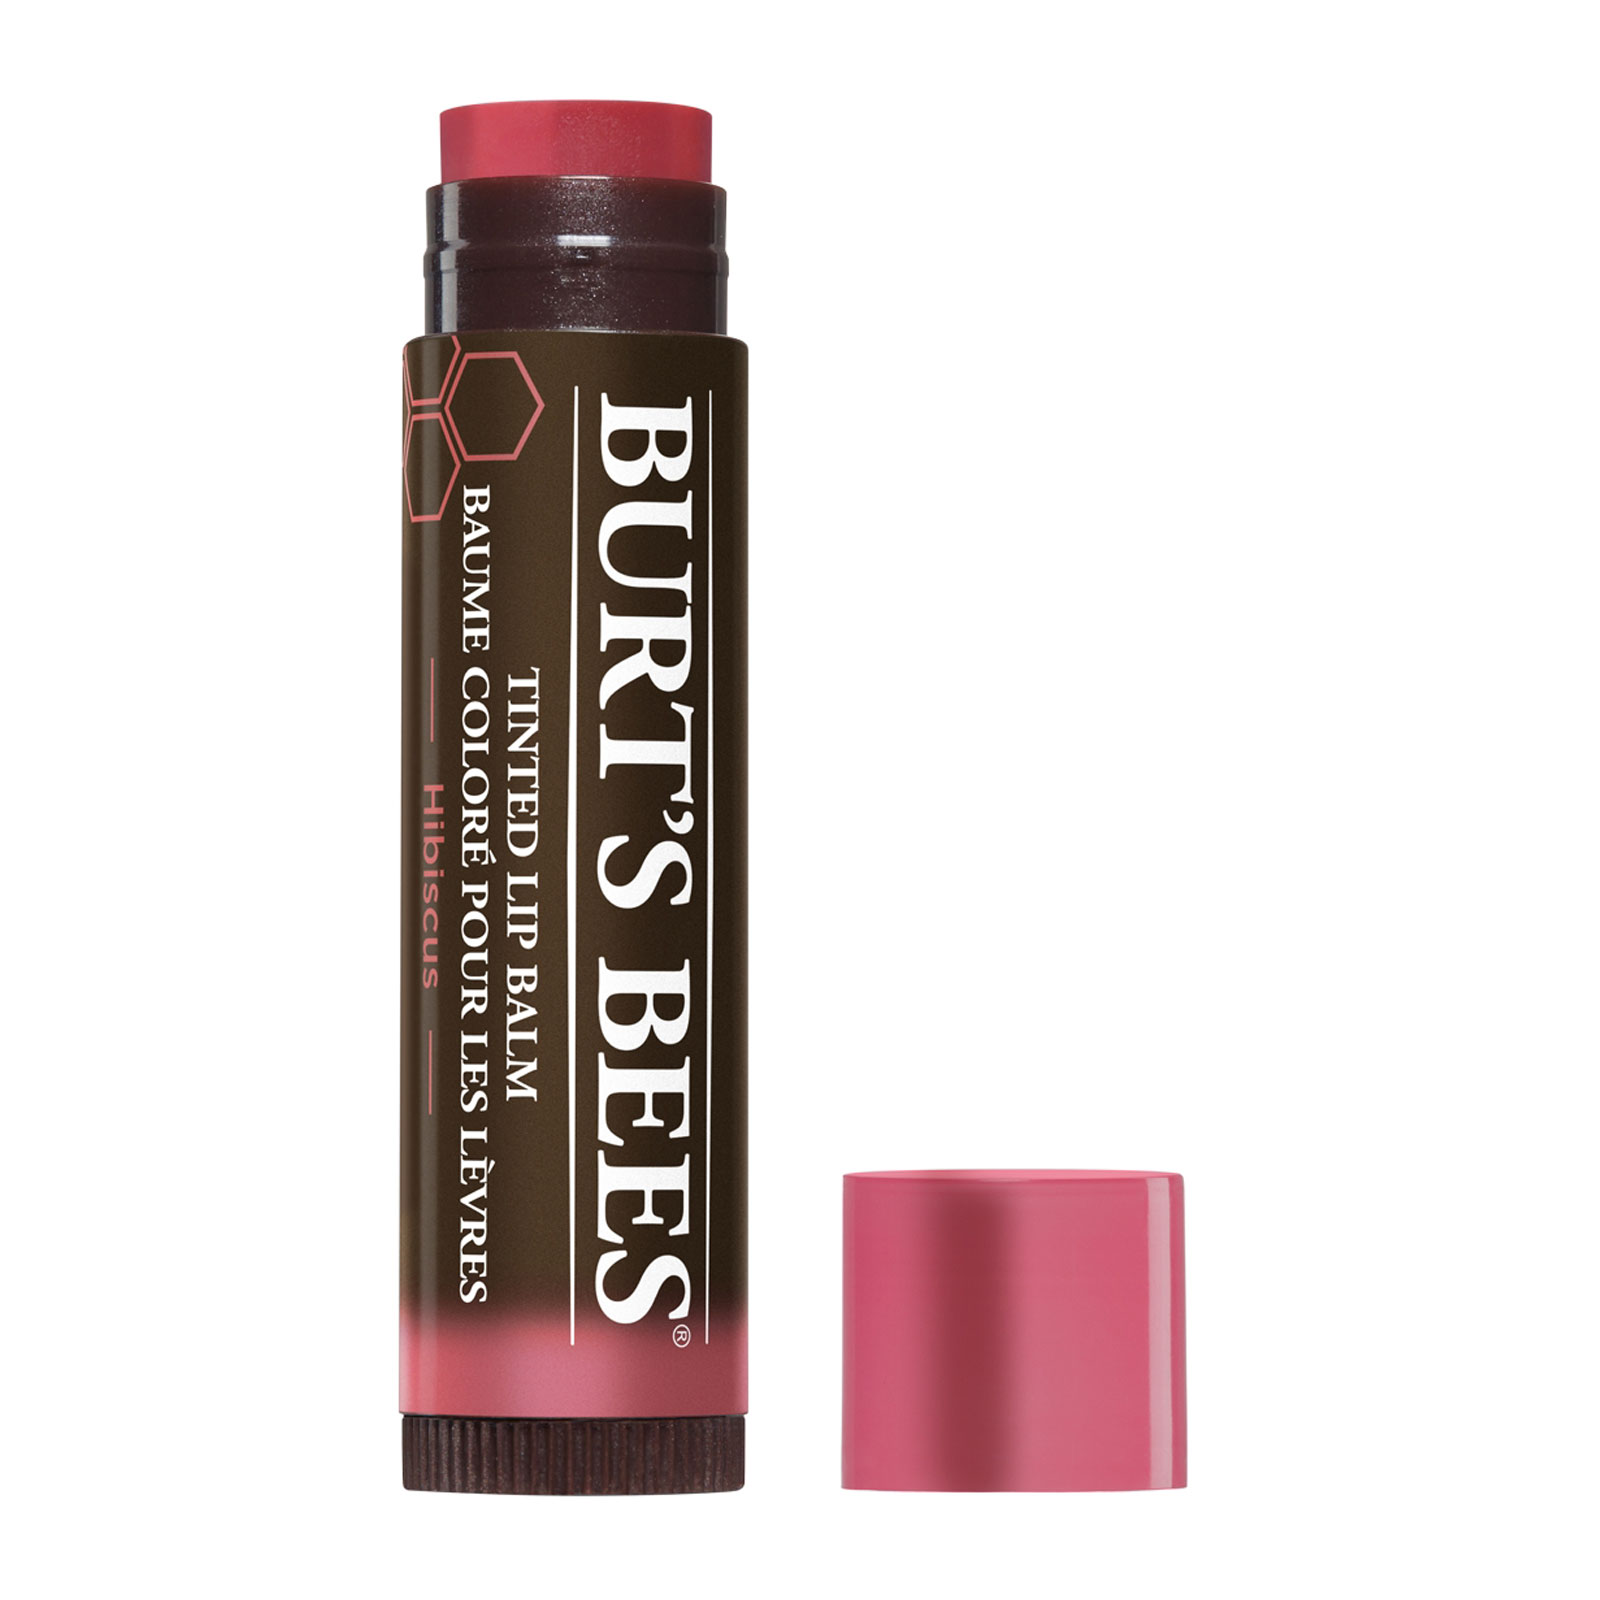 Burt's Bees Tinted Lip Balm 4.25g Pink Blossom